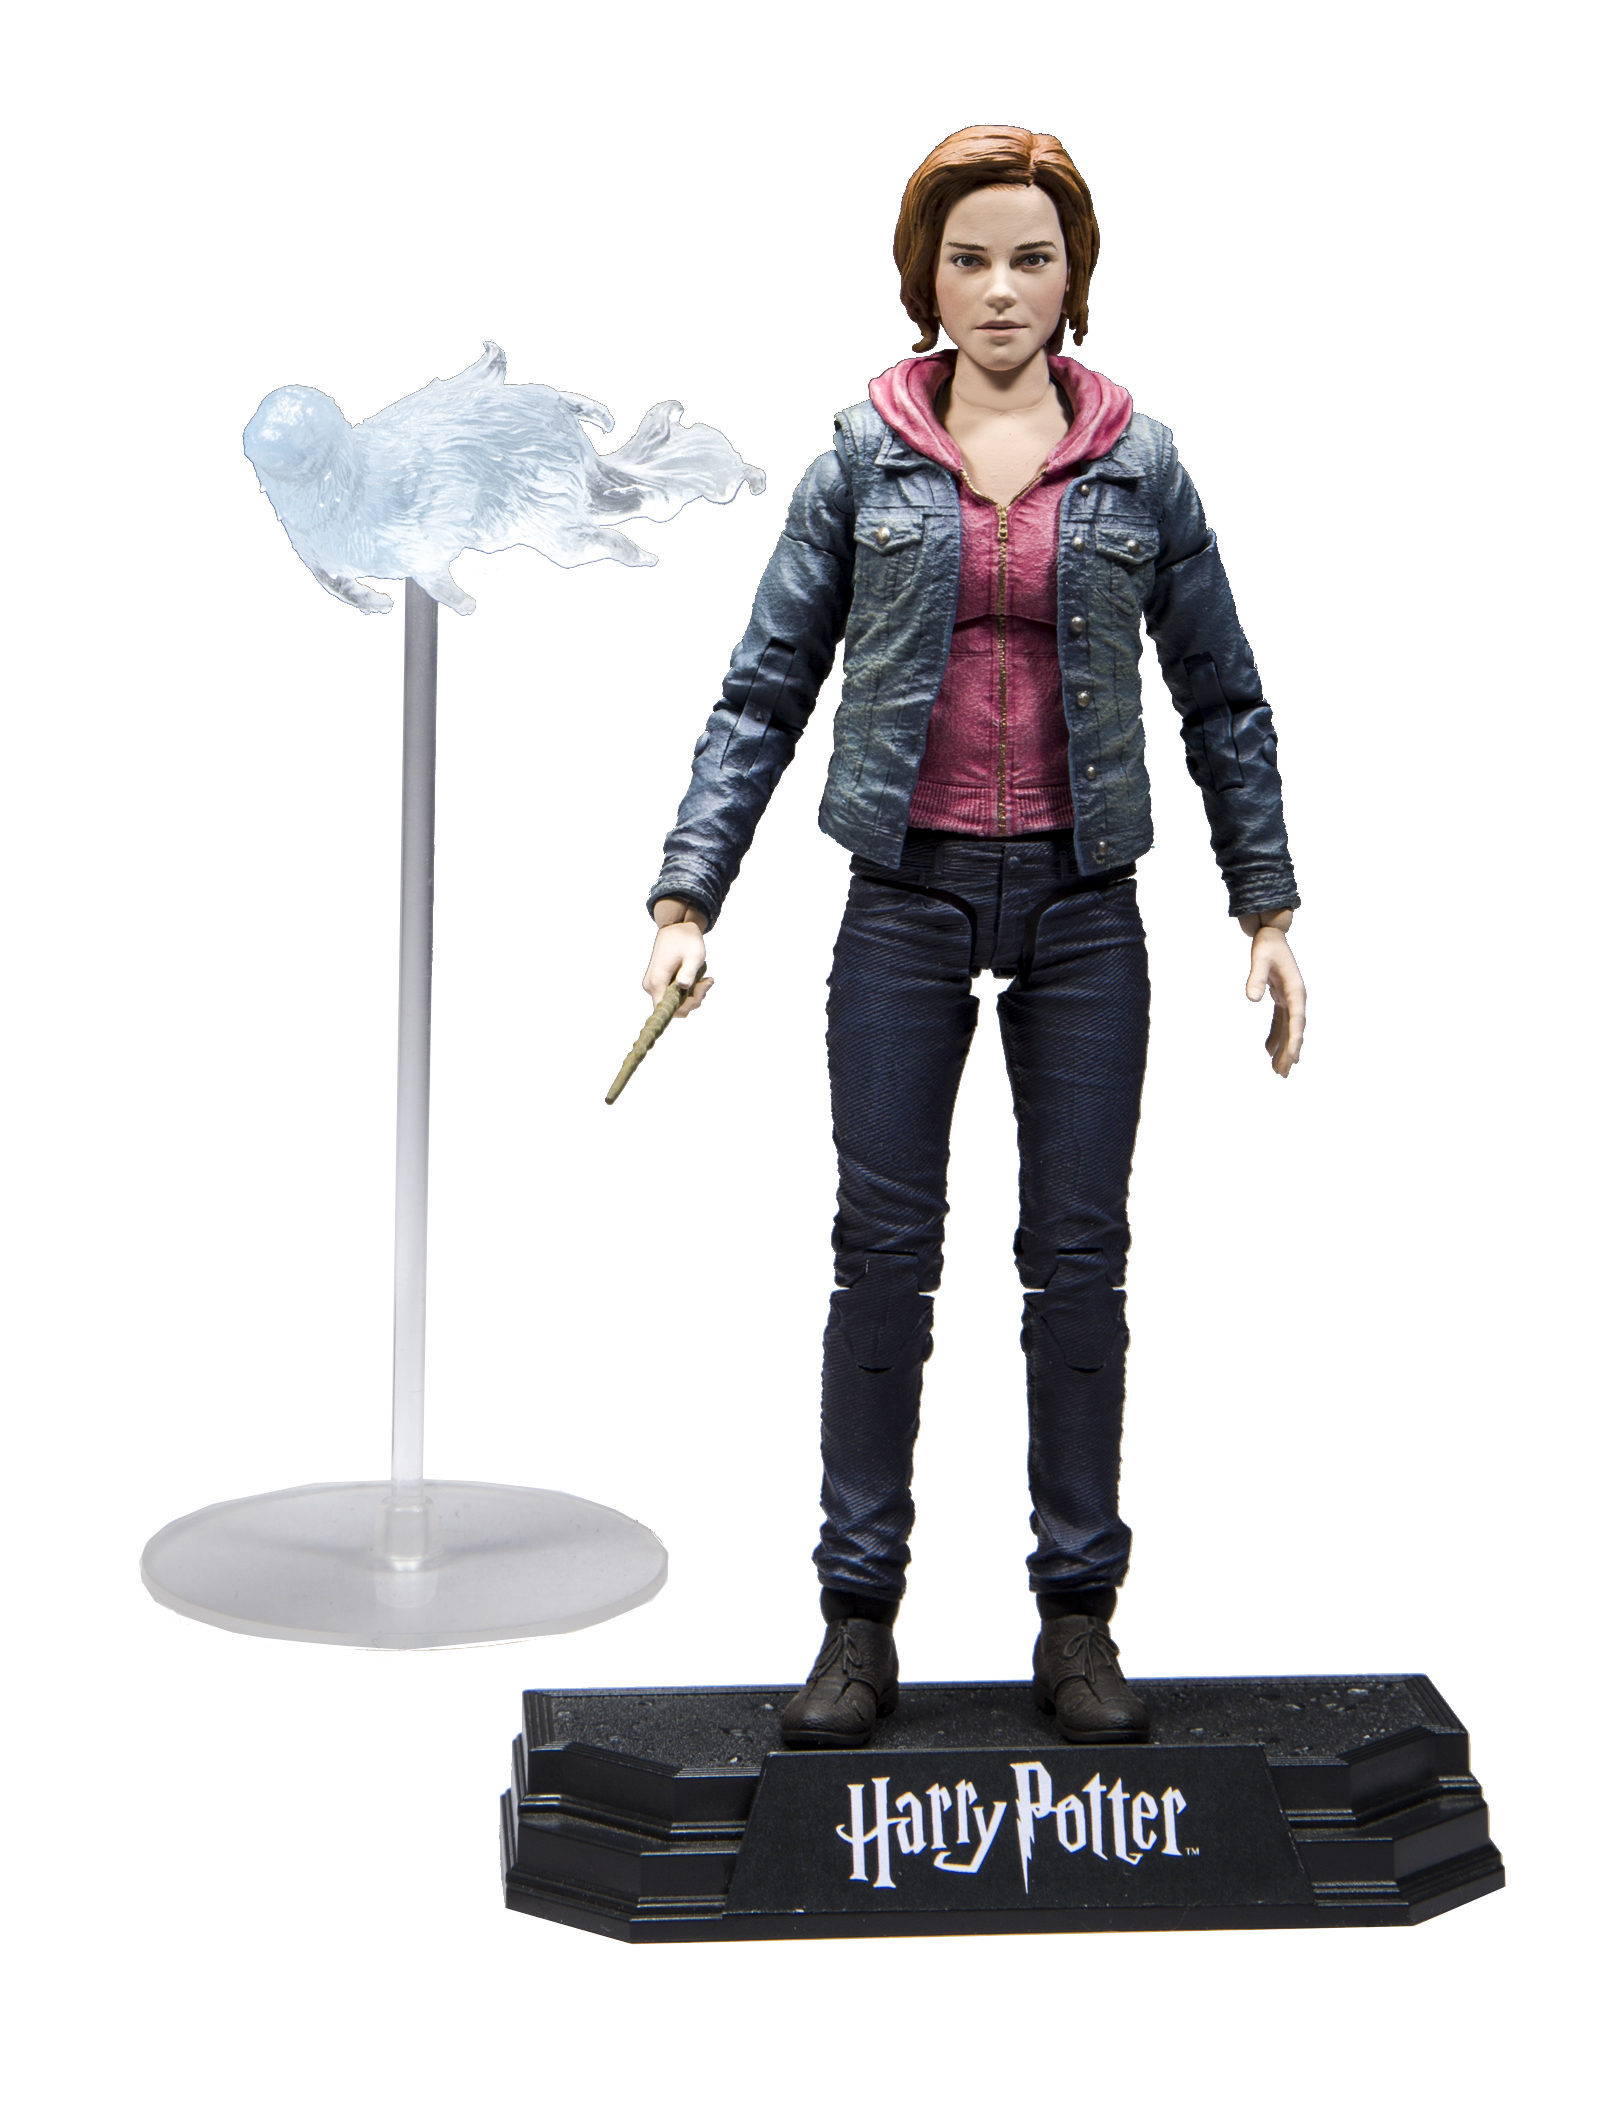 Hermione Granger Harry Potter action figures